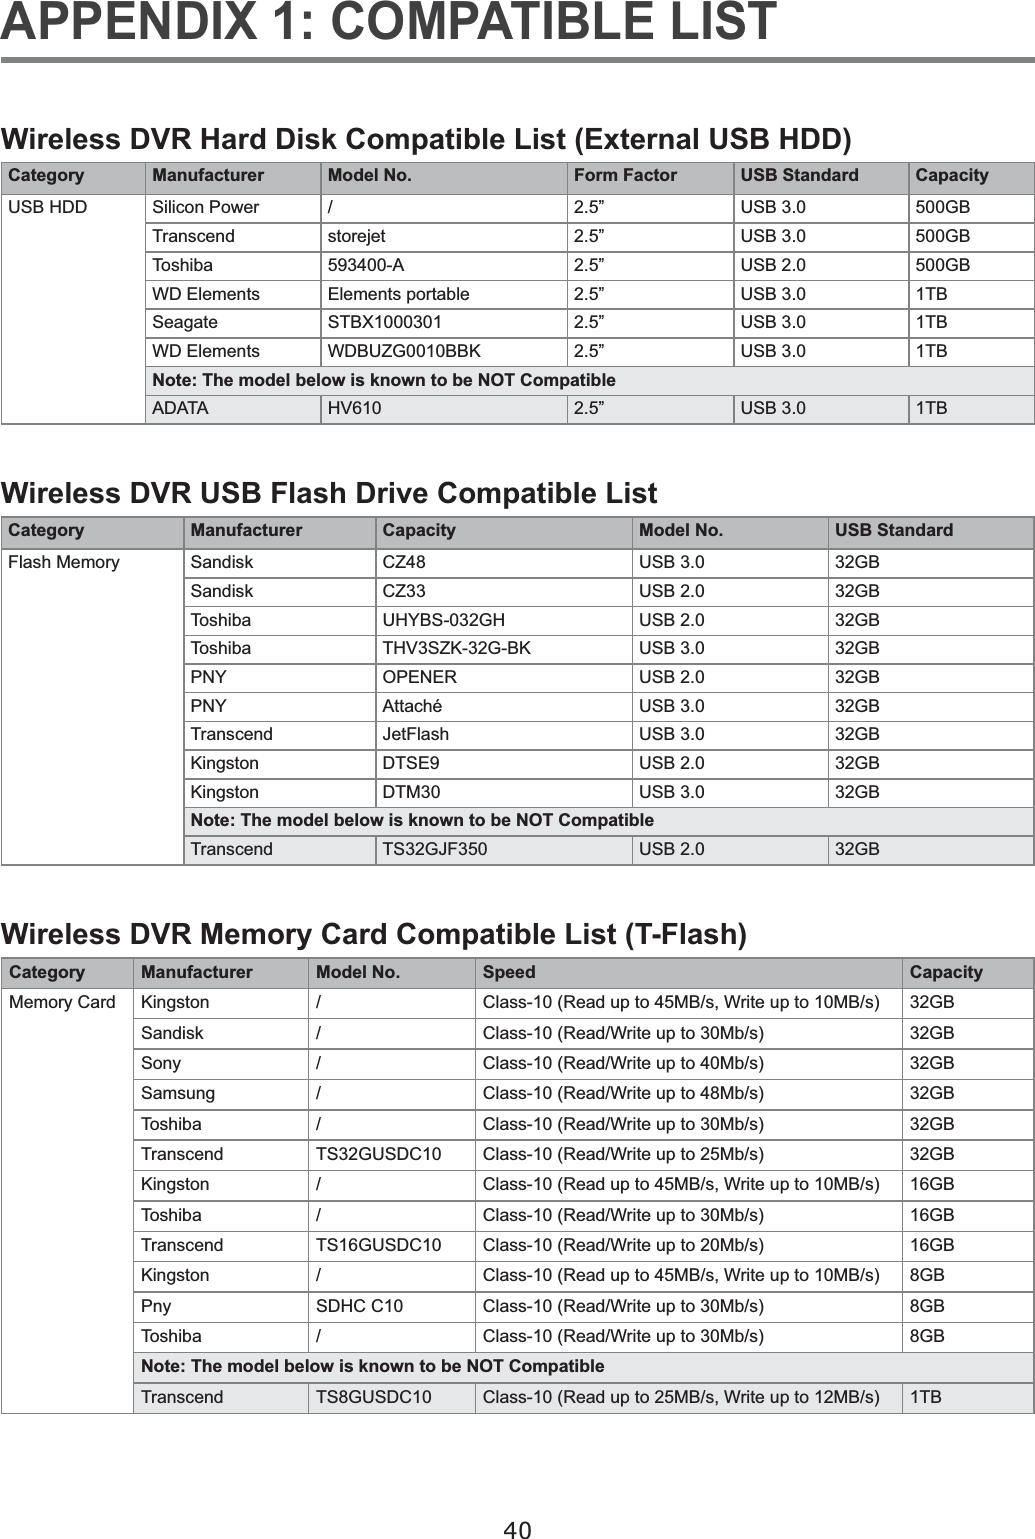 40APPENDIX 1: COMPATIBLE LISTWireless DVR Hard Disk Compatible List (External USB HDD)Category Manufacturer Model No. Form Factor USB Standard CapacityUSB HDD 6LOLFRQ3RZHU /´ USB 3.0 500GB7UDQVFHQG VWRUHMHW ´ USB 3.0 500GB7RVKLED $ ´ USB 2.0 500GB:&apos;(OHPHQWV (OHPHQWVSRUWDEOH ´ USB 3.0 1TBSeagate STBX1000301 ´ USB 3.0 1TB:&apos;(OHPHQWV WDBUZG0010BBK ´ USB 3.0 1TBNote: The model below is known to be NOT CompatibleADATA HV610 ´ USB 3.0 1TBWireless DVR USB Flash Drive Compatible ListCategory Manufacturer Capacity Model No.  USB Standard)ODVK0HPRU\ 6DQGLVN CZ48 USB 3.0 32GB6DQGLVN CZ33 USB 2.0 32GB7RVKLED 8+&lt;%6*+ USB 2.0 32GB7RVKLED 7+96=.*%. USB 3.0 32GBPNY OPENER USB 2.0 32GBPNY $WWDFKp USB 3.0 32GB7UDQVFHQG -HW)ODVK USB 3.0 32GBKingston DTSE9 USB 2.0 32GBKingston DTM30 USB 3.0 32GBNote: The model below is known to be NOT Compatible7UDQVFHQG TS32GJF350 USB 2.0 32GBWireless DVR Memory Card Compatible List (T-Flash)Category Manufacturer Model No. Speed Capacity0HPRU\&amp;DUG Kingston / &amp;ODVV5HDGXSWR0%V:ULWHXSWR0%V 32GB6DQGLVN /&amp;ODVV5HDG:ULWHXSWR0EV 32GBSony / &amp;ODVV5HDG:ULWHXSWR0EV 32GB6DPVXQJ /&amp;ODVV5HDG:ULWHXSWR0EV 32GB7RVKLED /&amp;ODVV5HDG:ULWHXSWR0EV 32GB7UDQVFHQG TS32GUSDC10 &amp;ODVV5HDG:ULWHXSWR0EV 32GBKingston / &amp;ODVV5HDGXSWR0%V:ULWHXSWR0%V 16GB7RVKLED /&amp;ODVV5HDG:ULWHXSWR0EV 16GB7UDQVFHQG TS16GUSDC10 &amp;ODVV5HDG:ULWHXSWR0EV 16GBKingston / &amp;ODVV5HDGXSWR0%V:ULWHXSWR0%V 8GBPny SDHC C10 &amp;ODVV5HDG:ULWHXSWR0EV 8GB7RVKLED /&amp;ODVV5HDG:ULWHXSWR0EV 8GBNote: The model below is known to be NOT Compatible7UDQVFHQG TS8GUSDC10 &amp;ODVV5HDGXSWR0%V:ULWHXSWR0%V 1TB